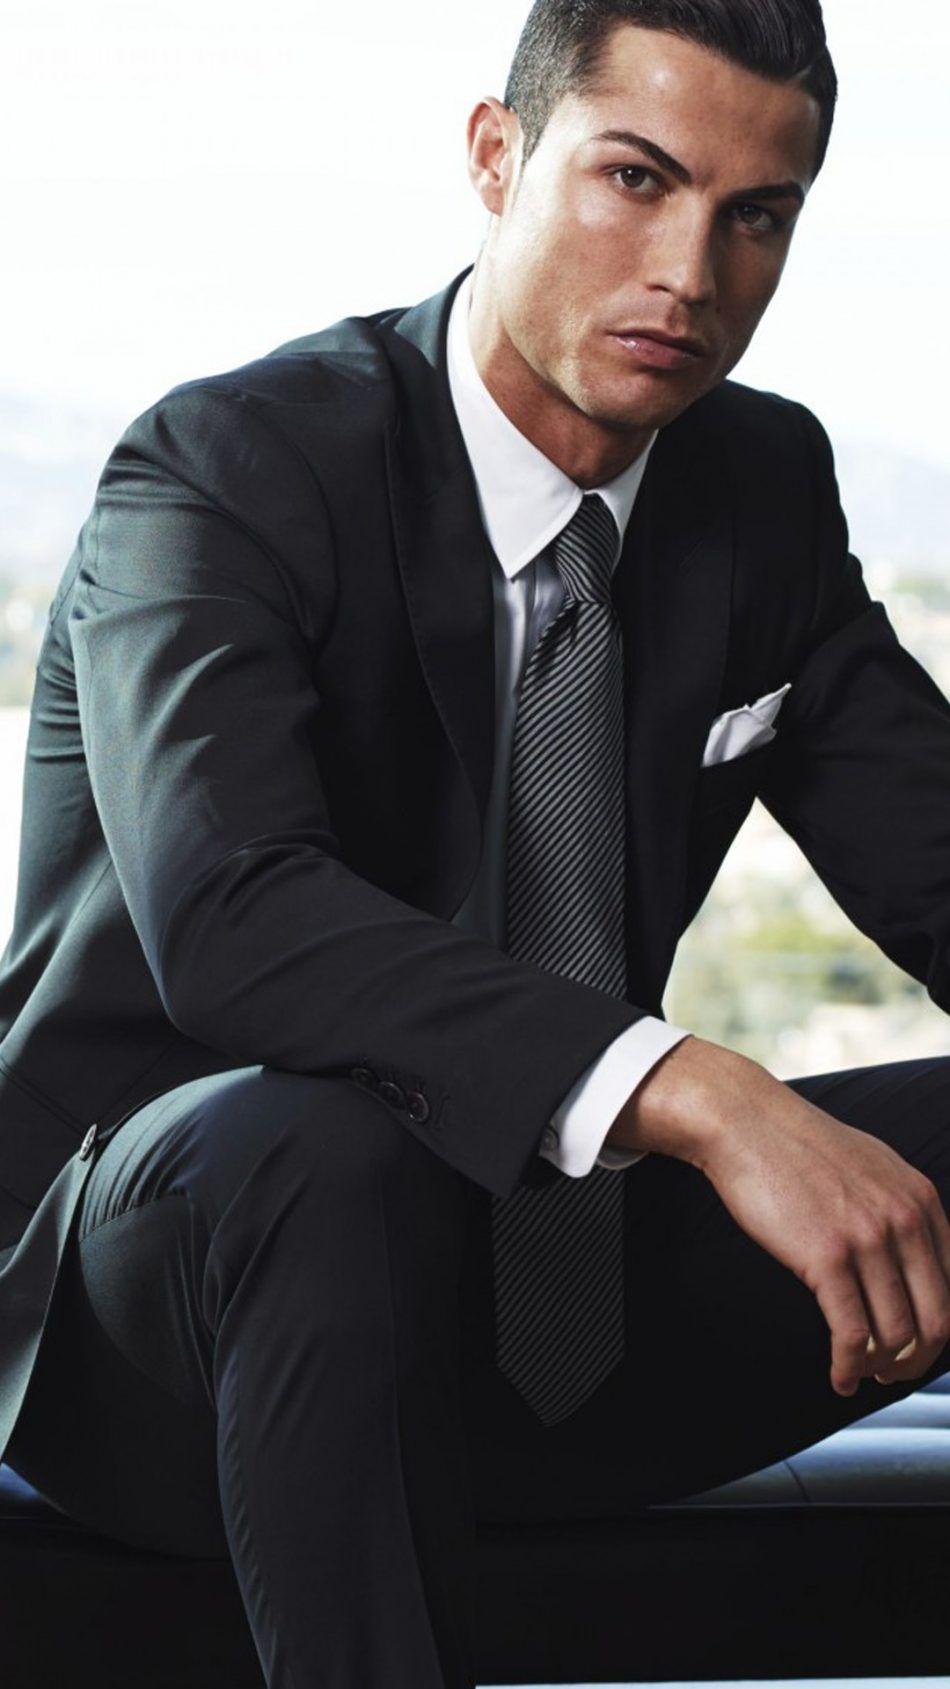 Download Cristiano Ronaldo Suit & Tie Dress Free Pure 4K. Ronaldo 4k Mobile Wallpaper